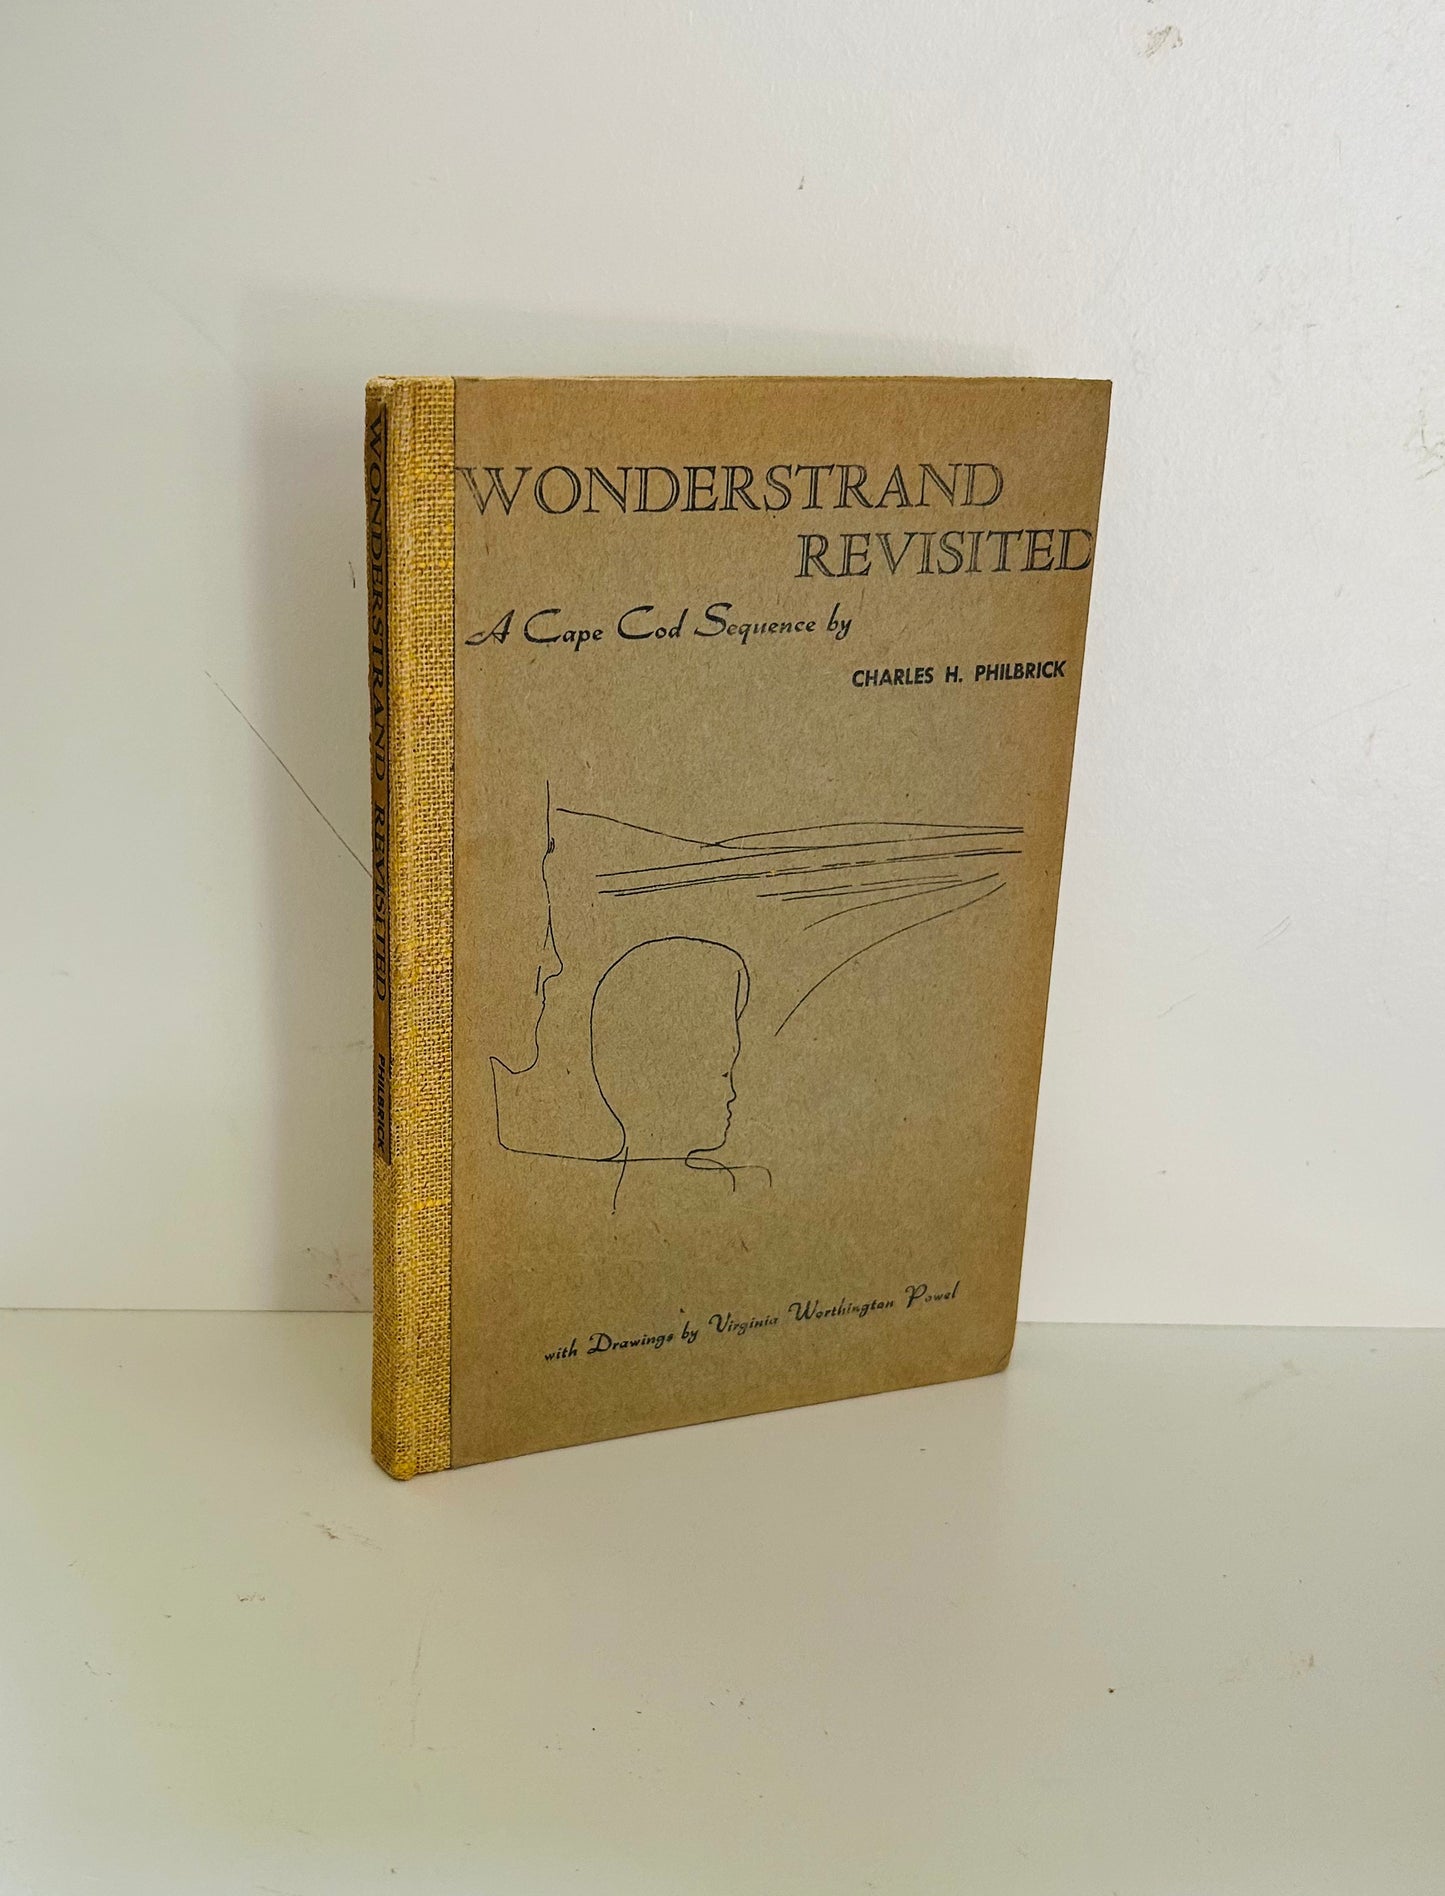 Wonderstrand Revisited